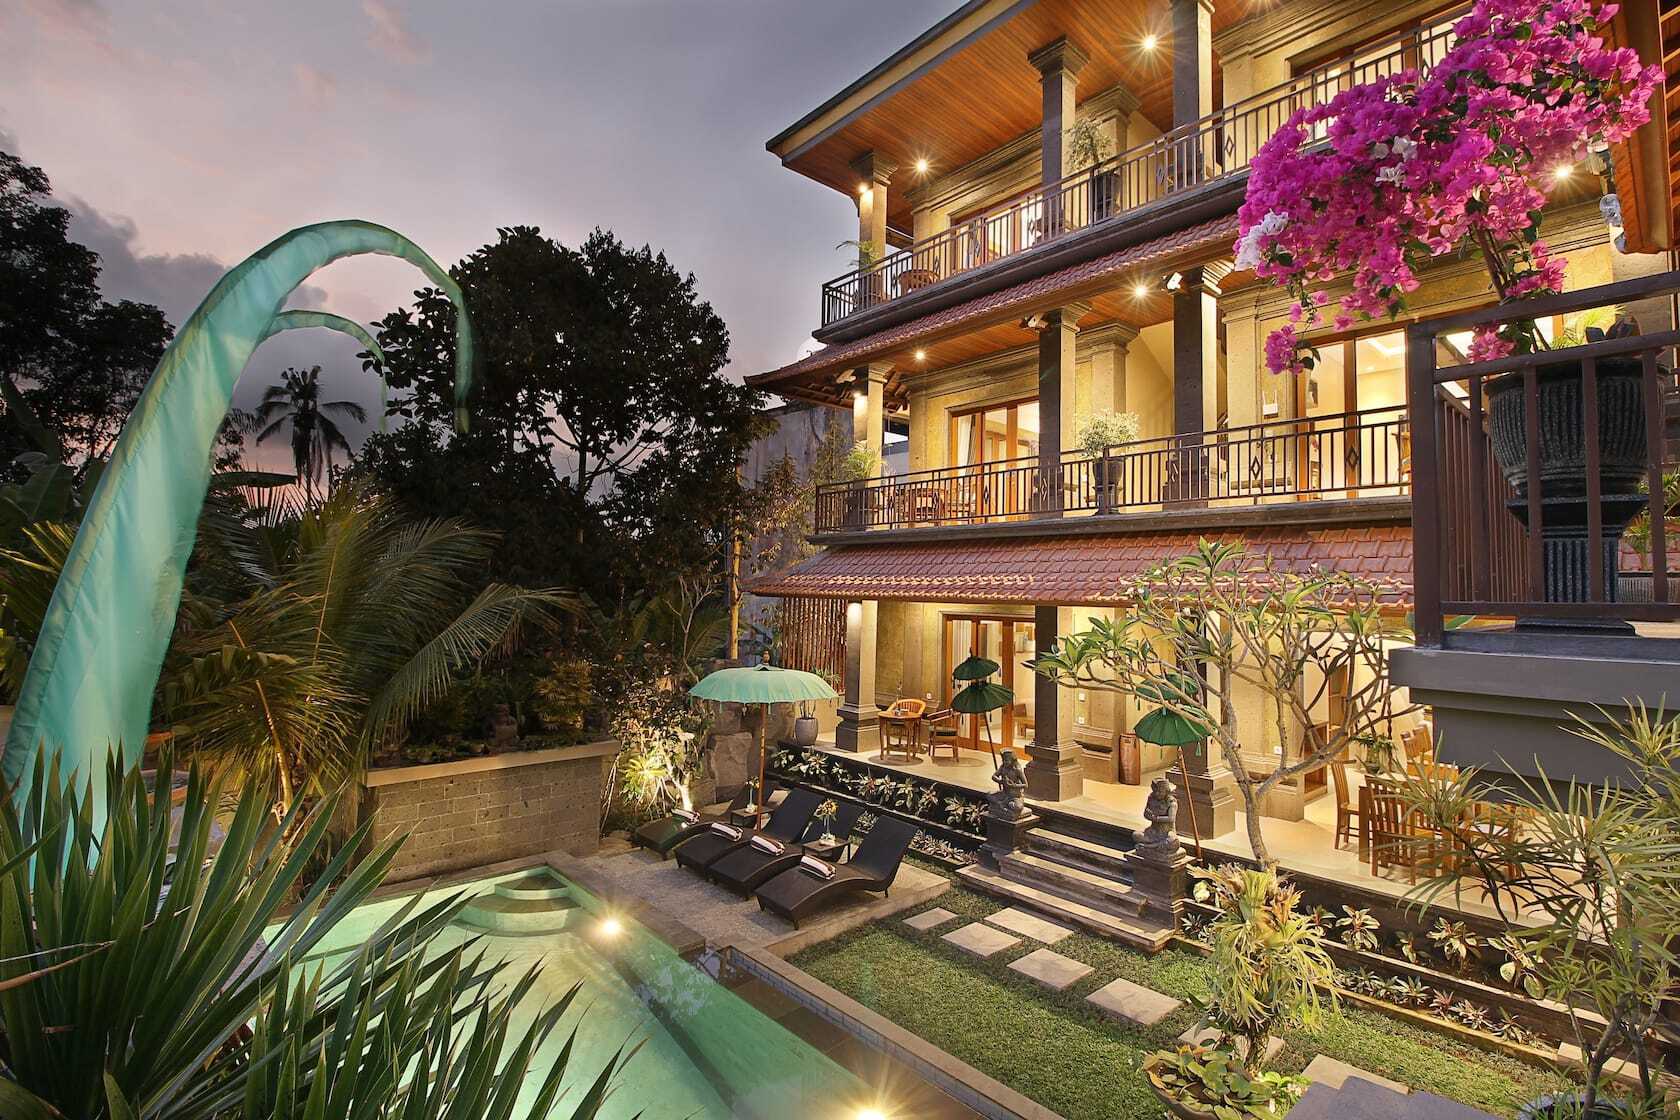 Best Villas In Bali / The Best Luxury Villas In Bali - Tembok Gajah